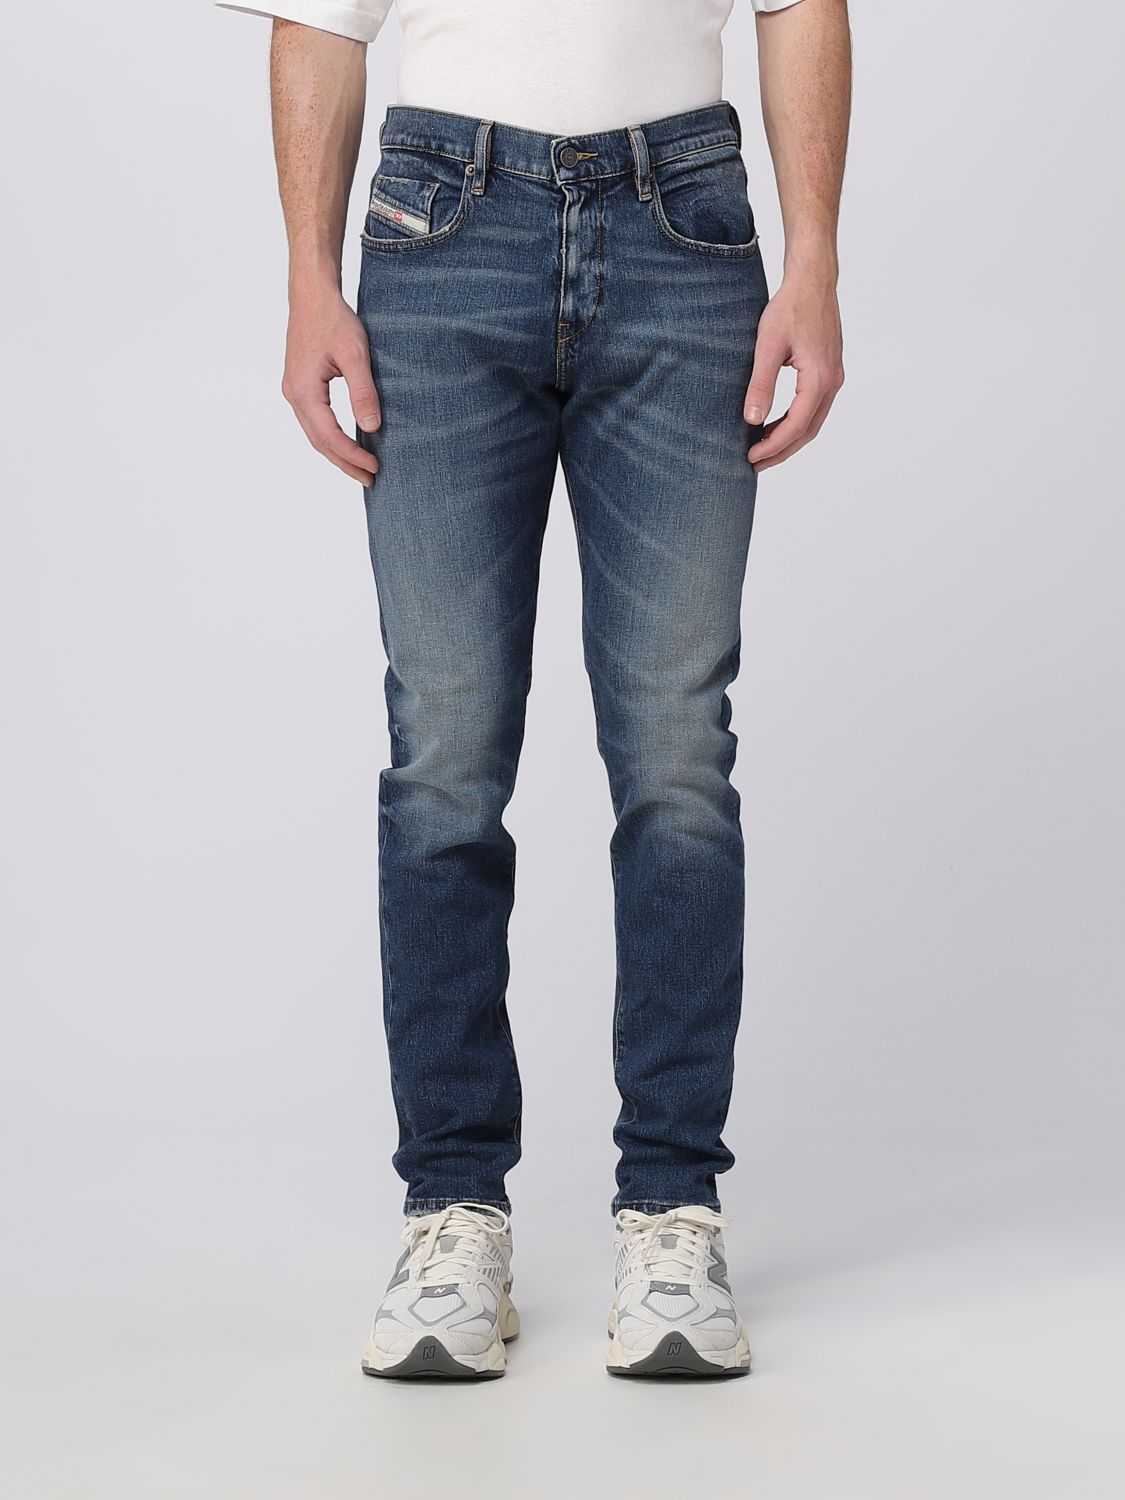 DIESEL: jeans for man - Denim | Diesel A03558007L1 on GIGLIO.COM